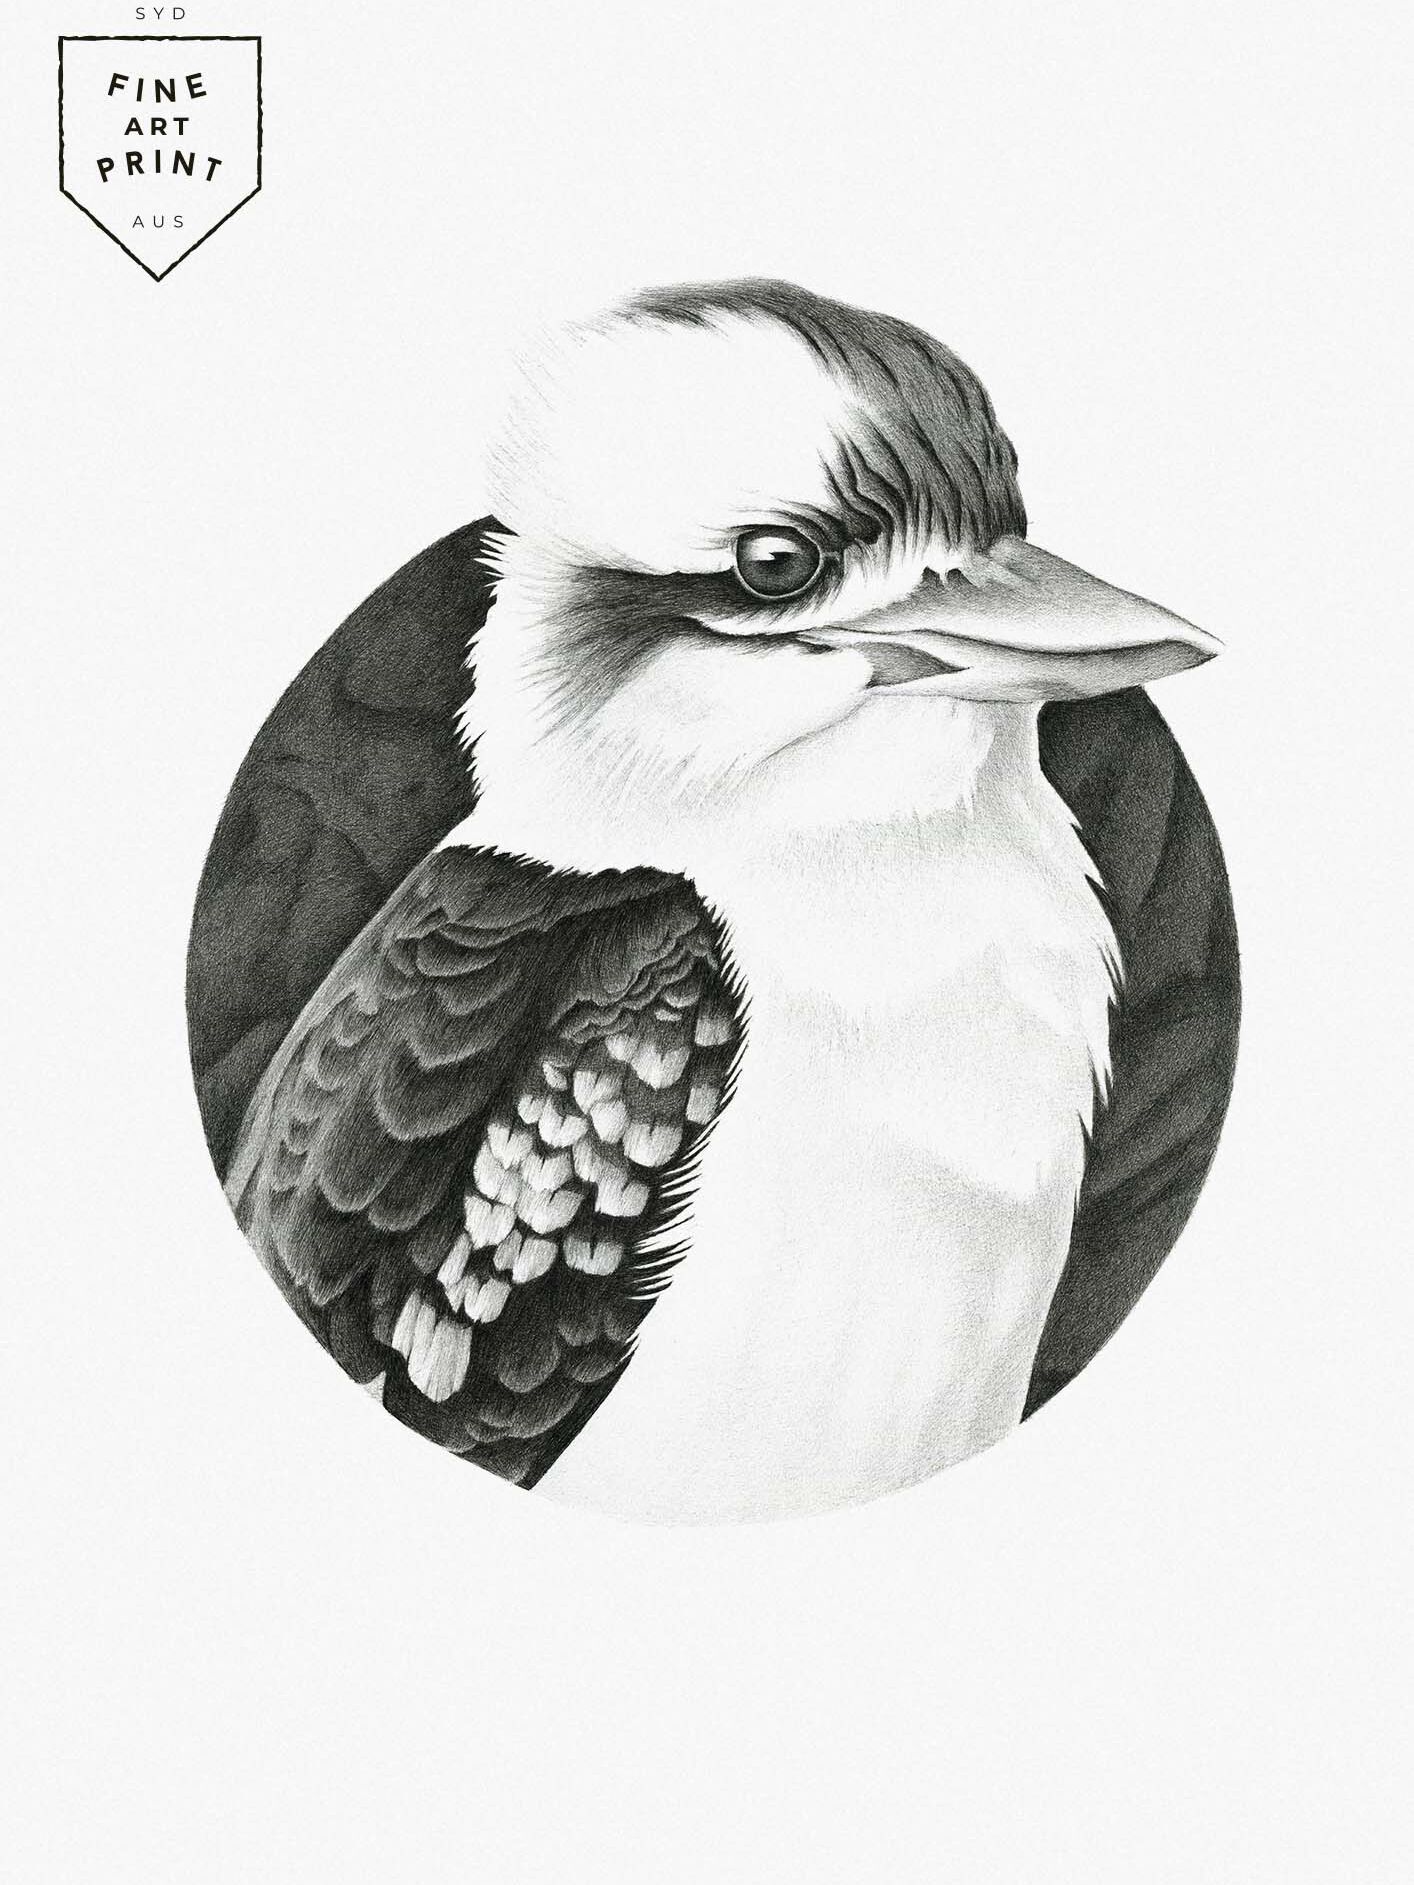 Kookaburra fine art print